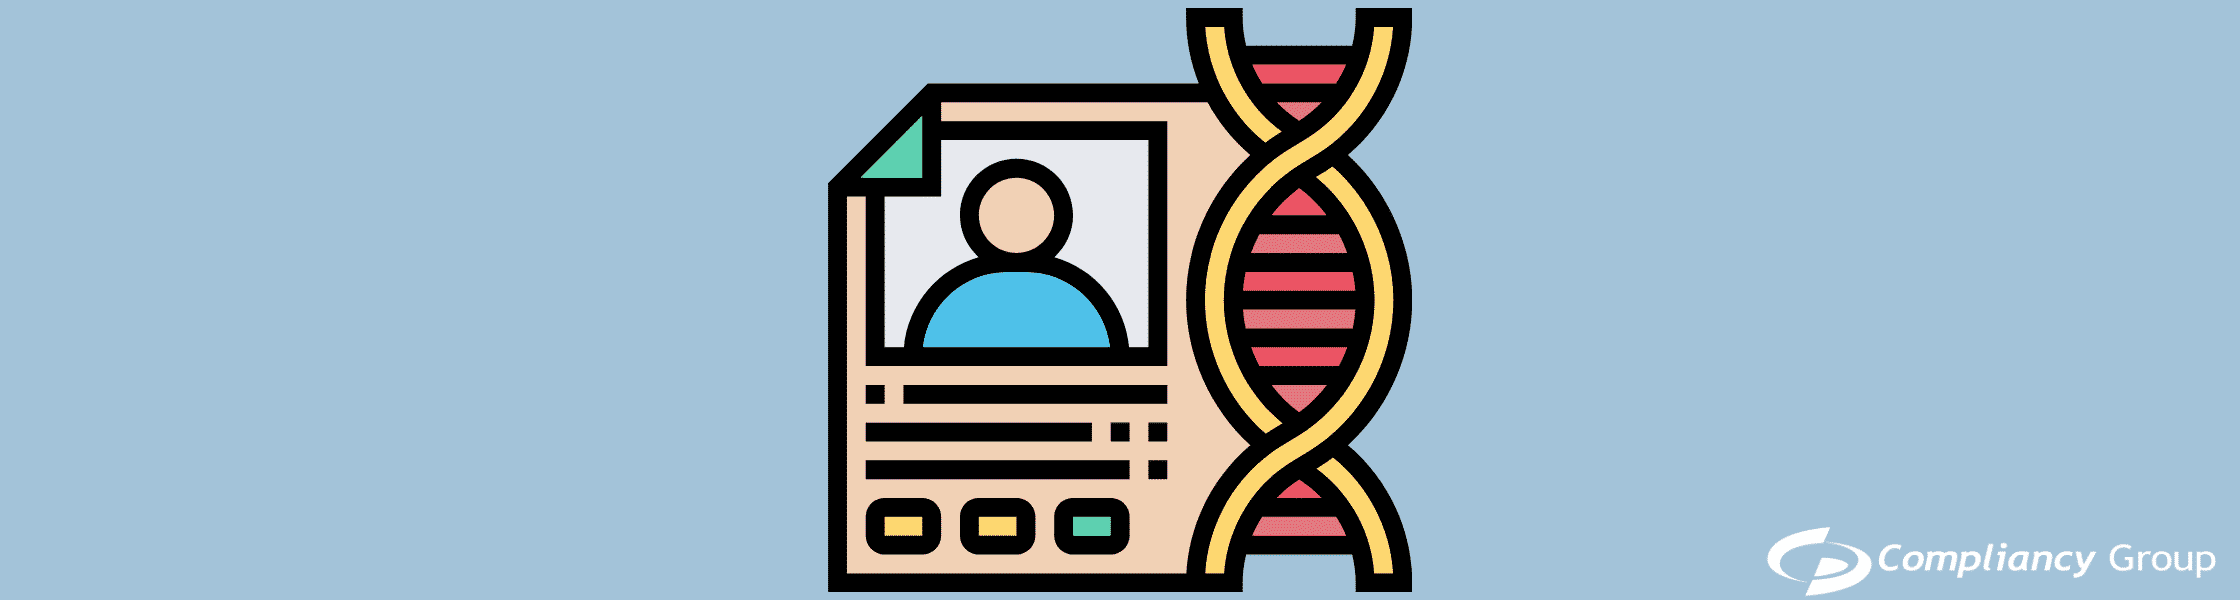 HIPAA Genetic Information